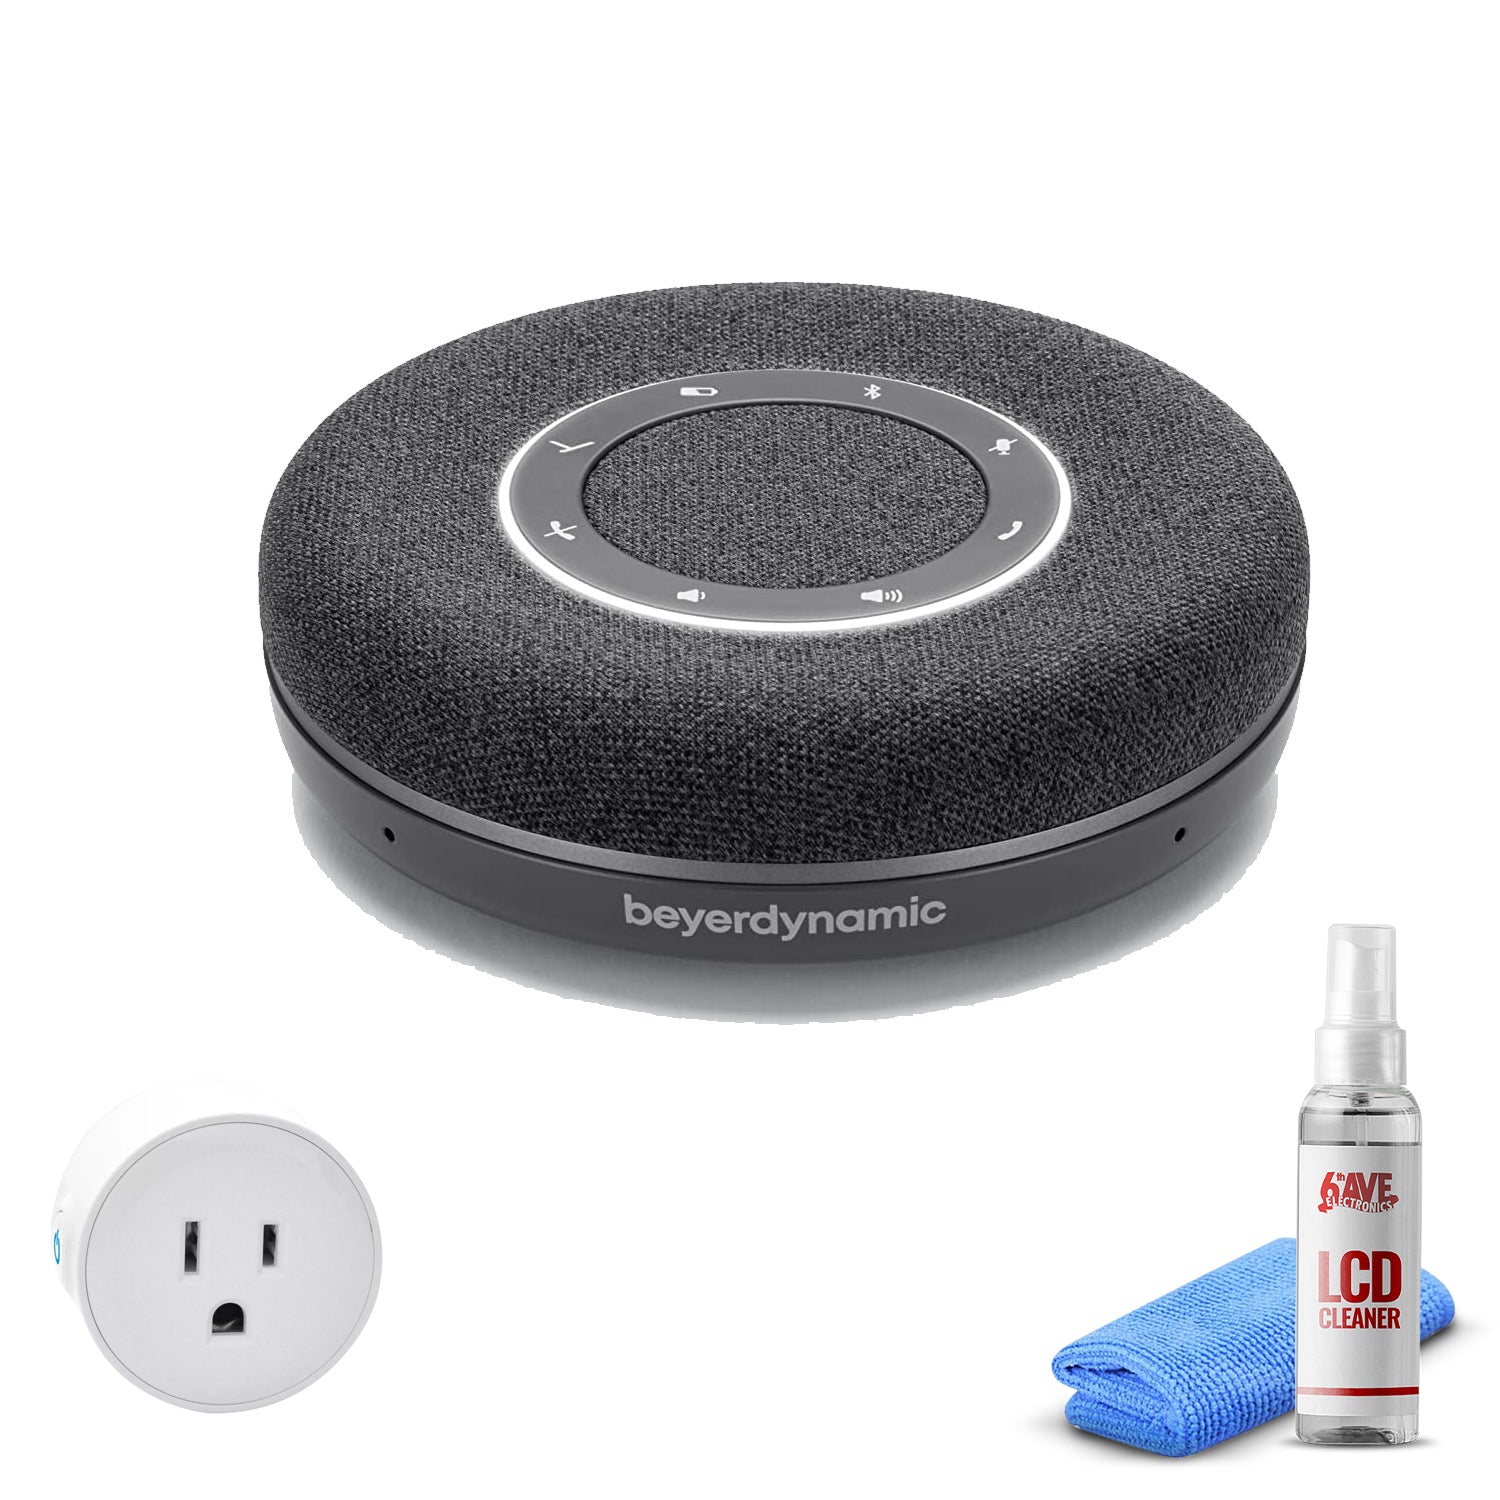 Beyerdynamic Space Speaker (Charcoal) + Wifi Mini Smart Plug + LCD Cleaner